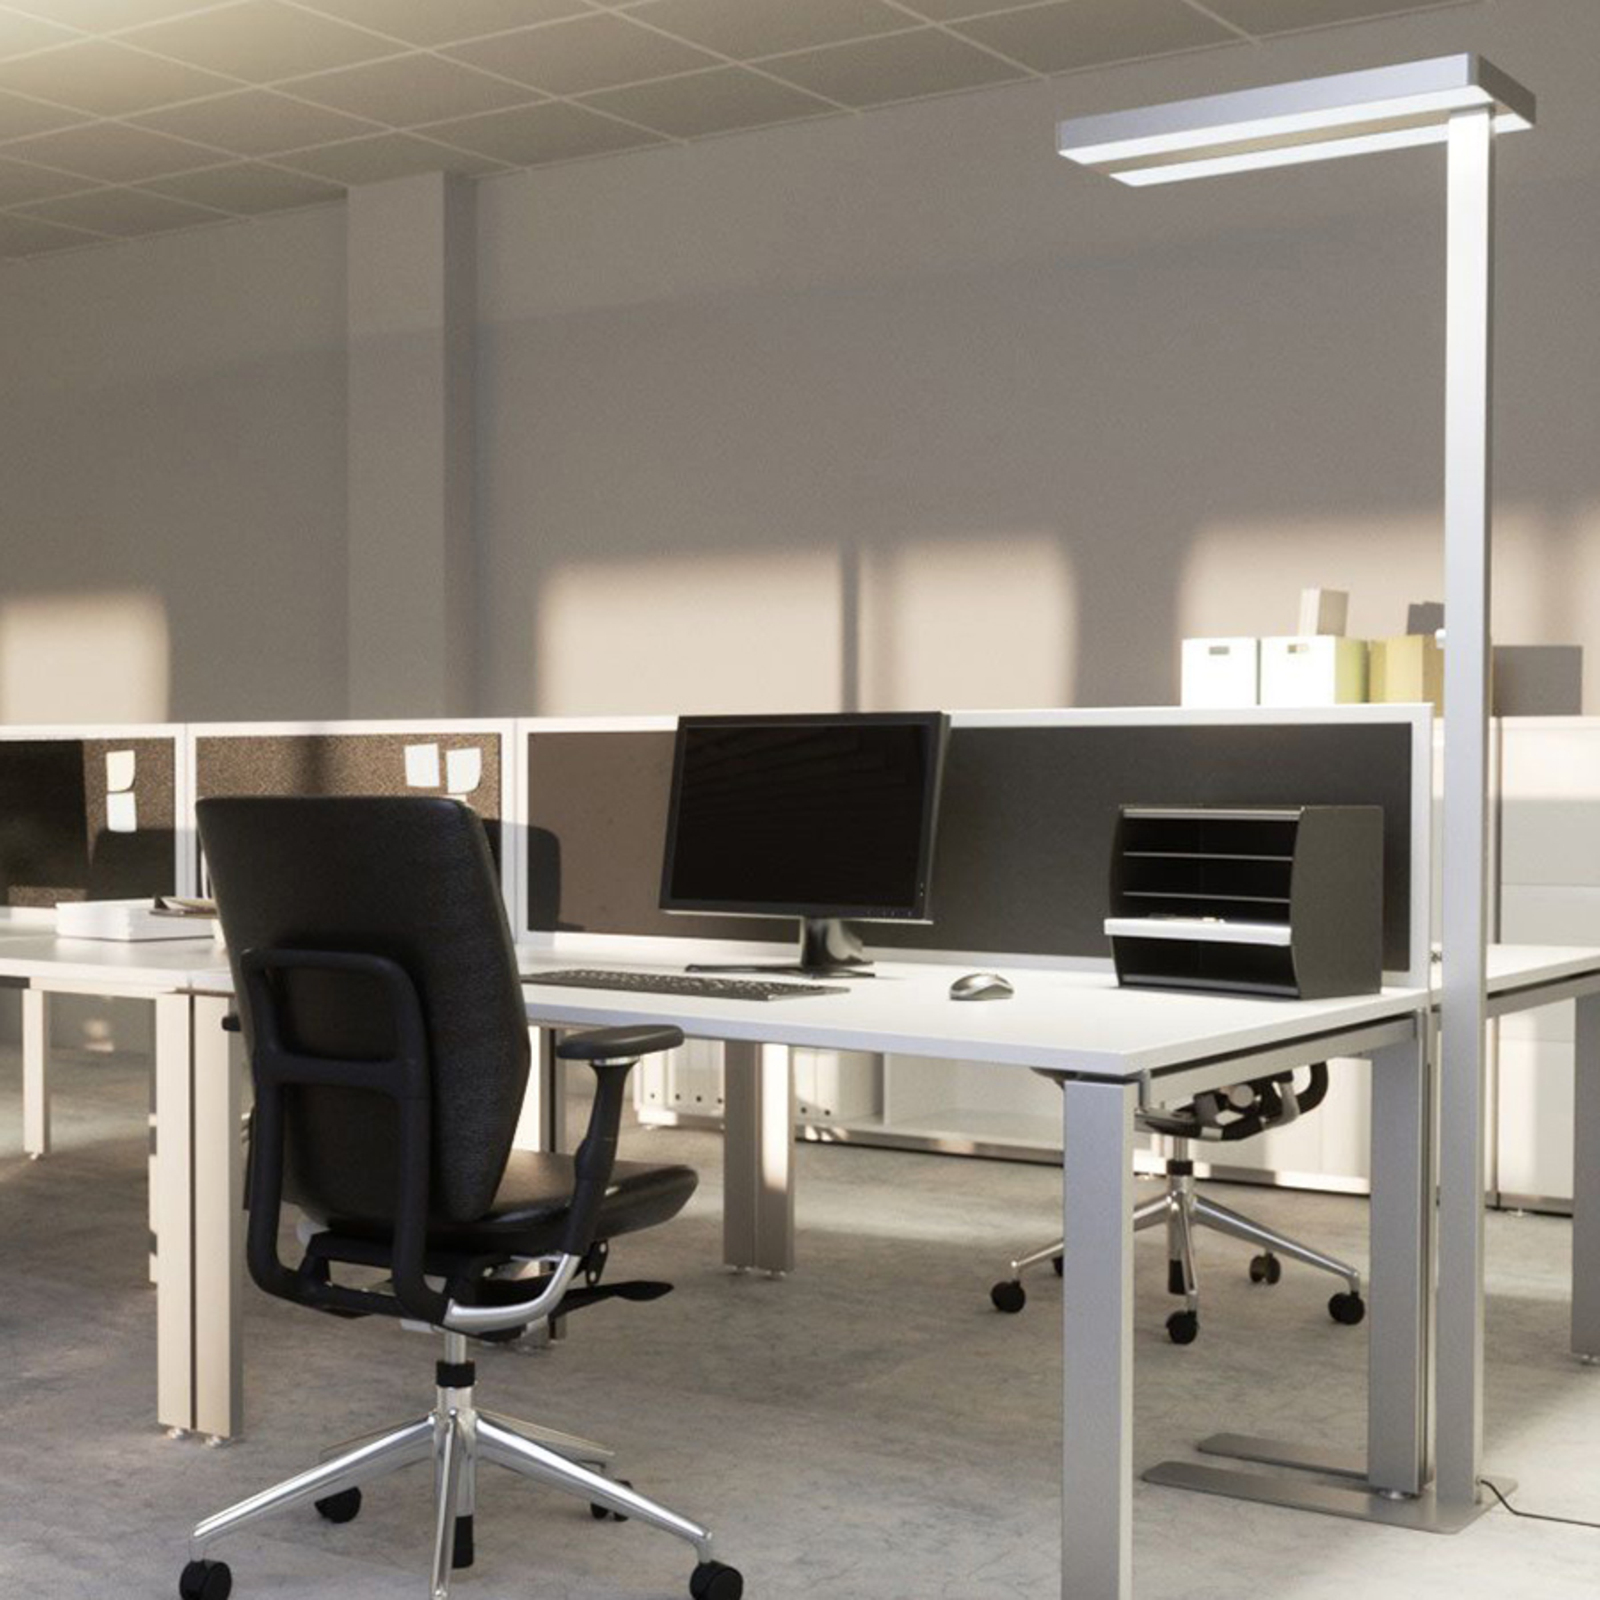 Logan - LED-Büro-Stehlampe mit Dimmer